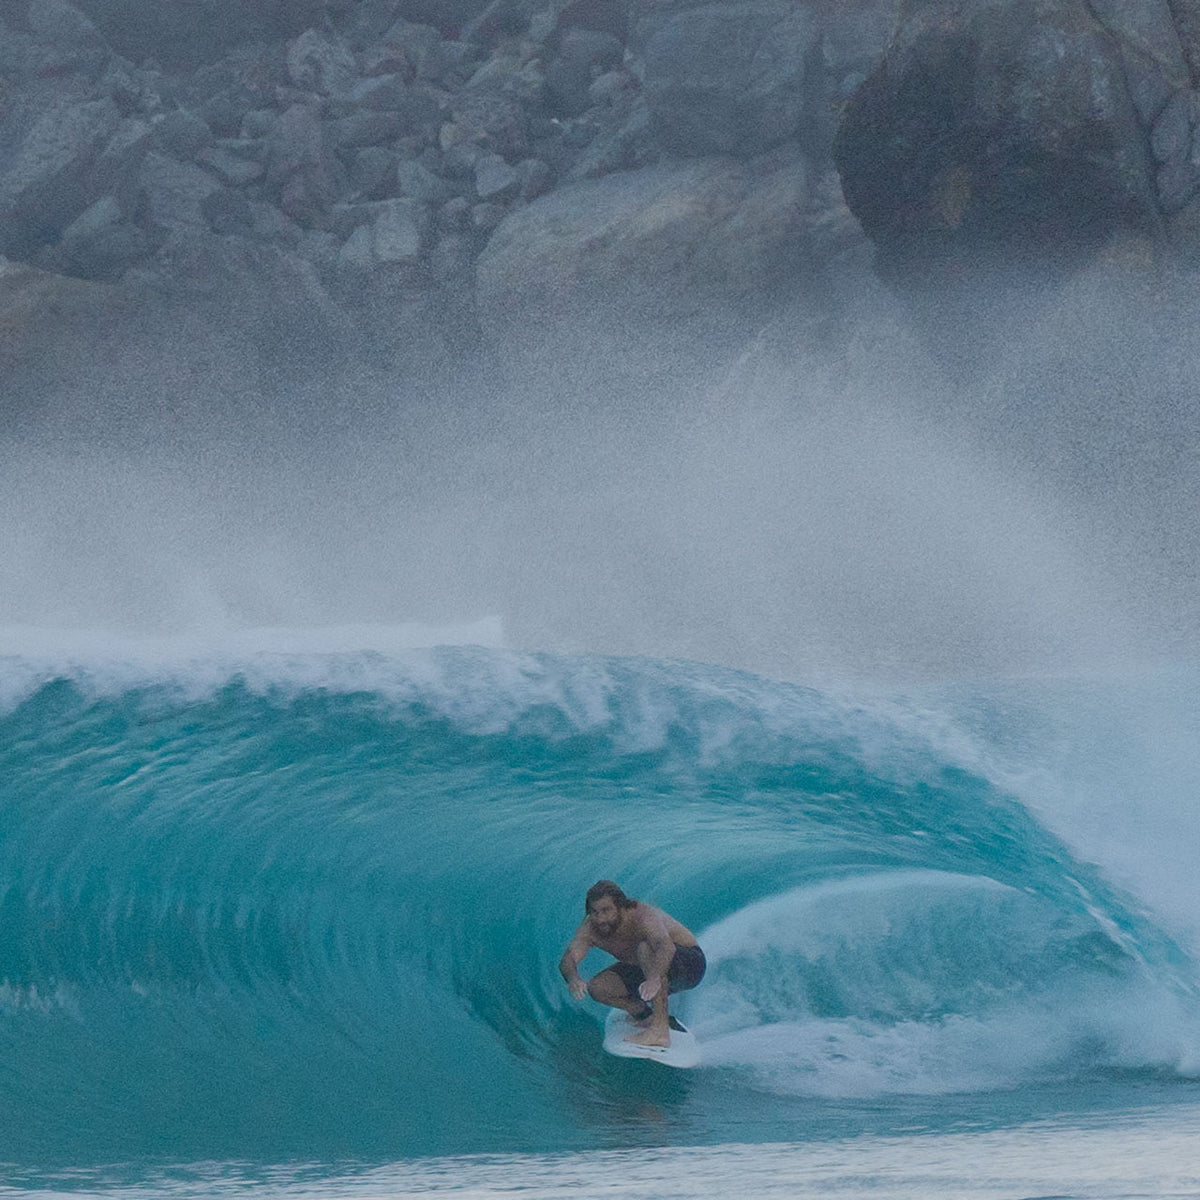 Wade Carmichael deep in the barrel in Mexico - Rusty Surfboards